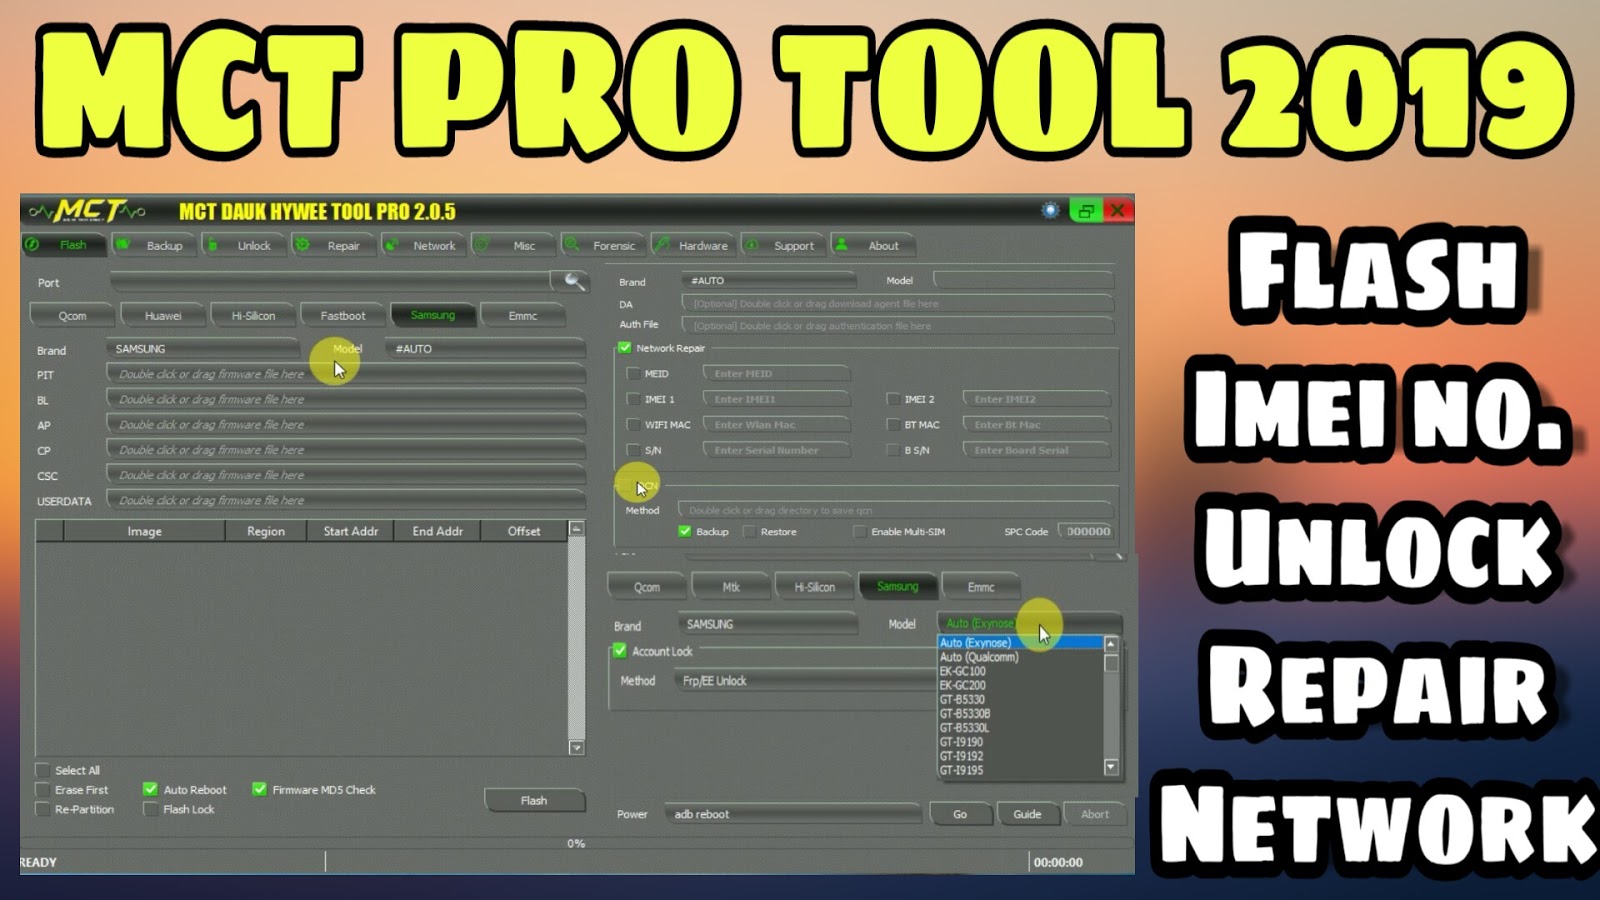 MCT Tool Pro 2.0.5. Pro Tools 5.0. TFM Tool Pro. Act Unlock Tool Pro v2.0. Flash tool unlock